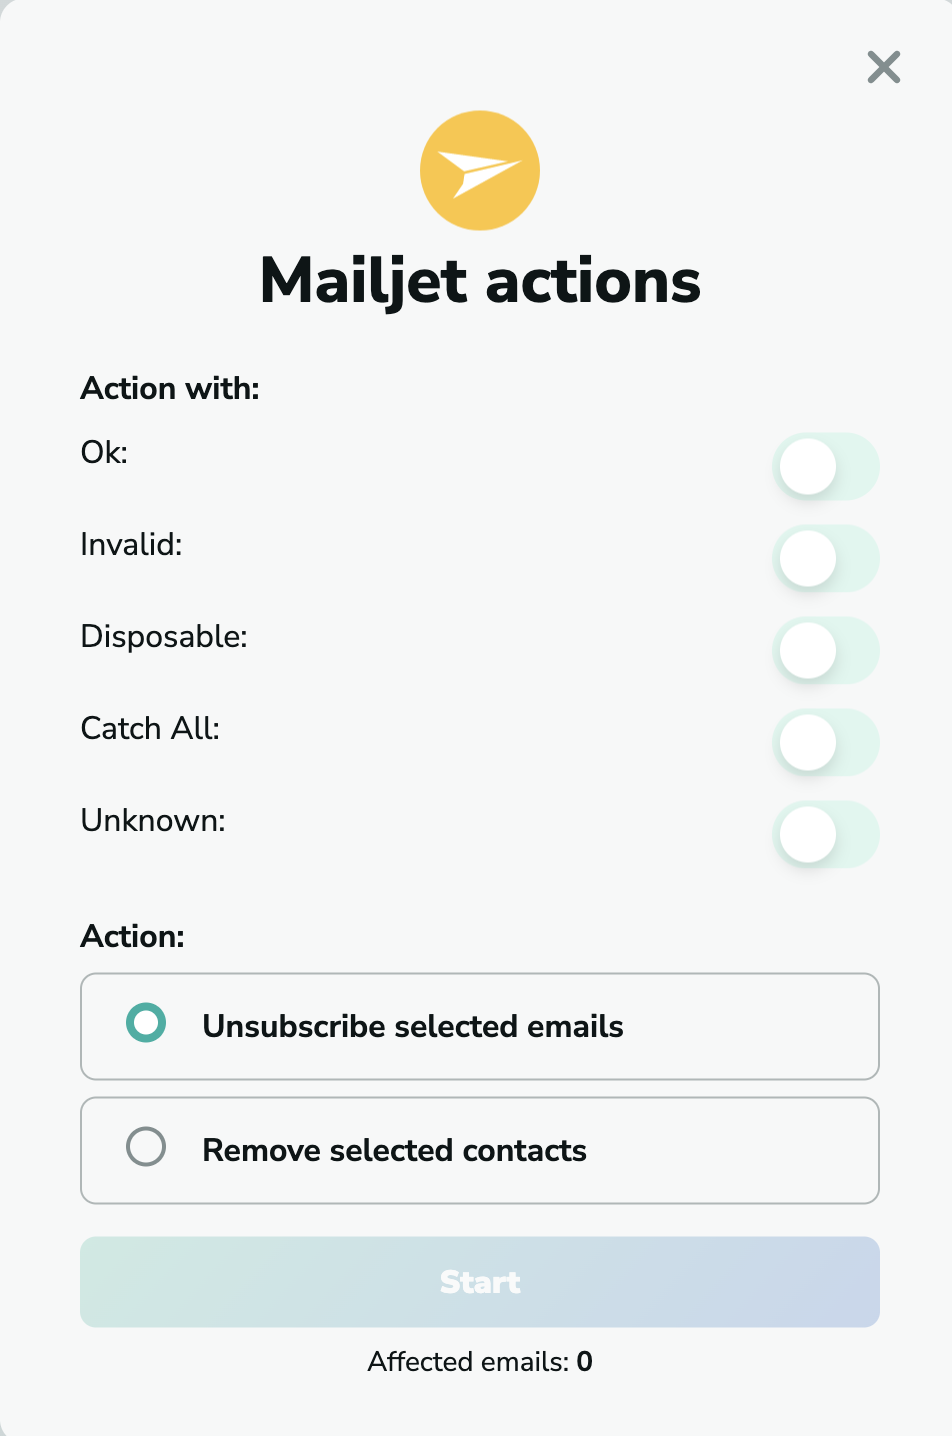 Mailjet actions in MillionVerifier